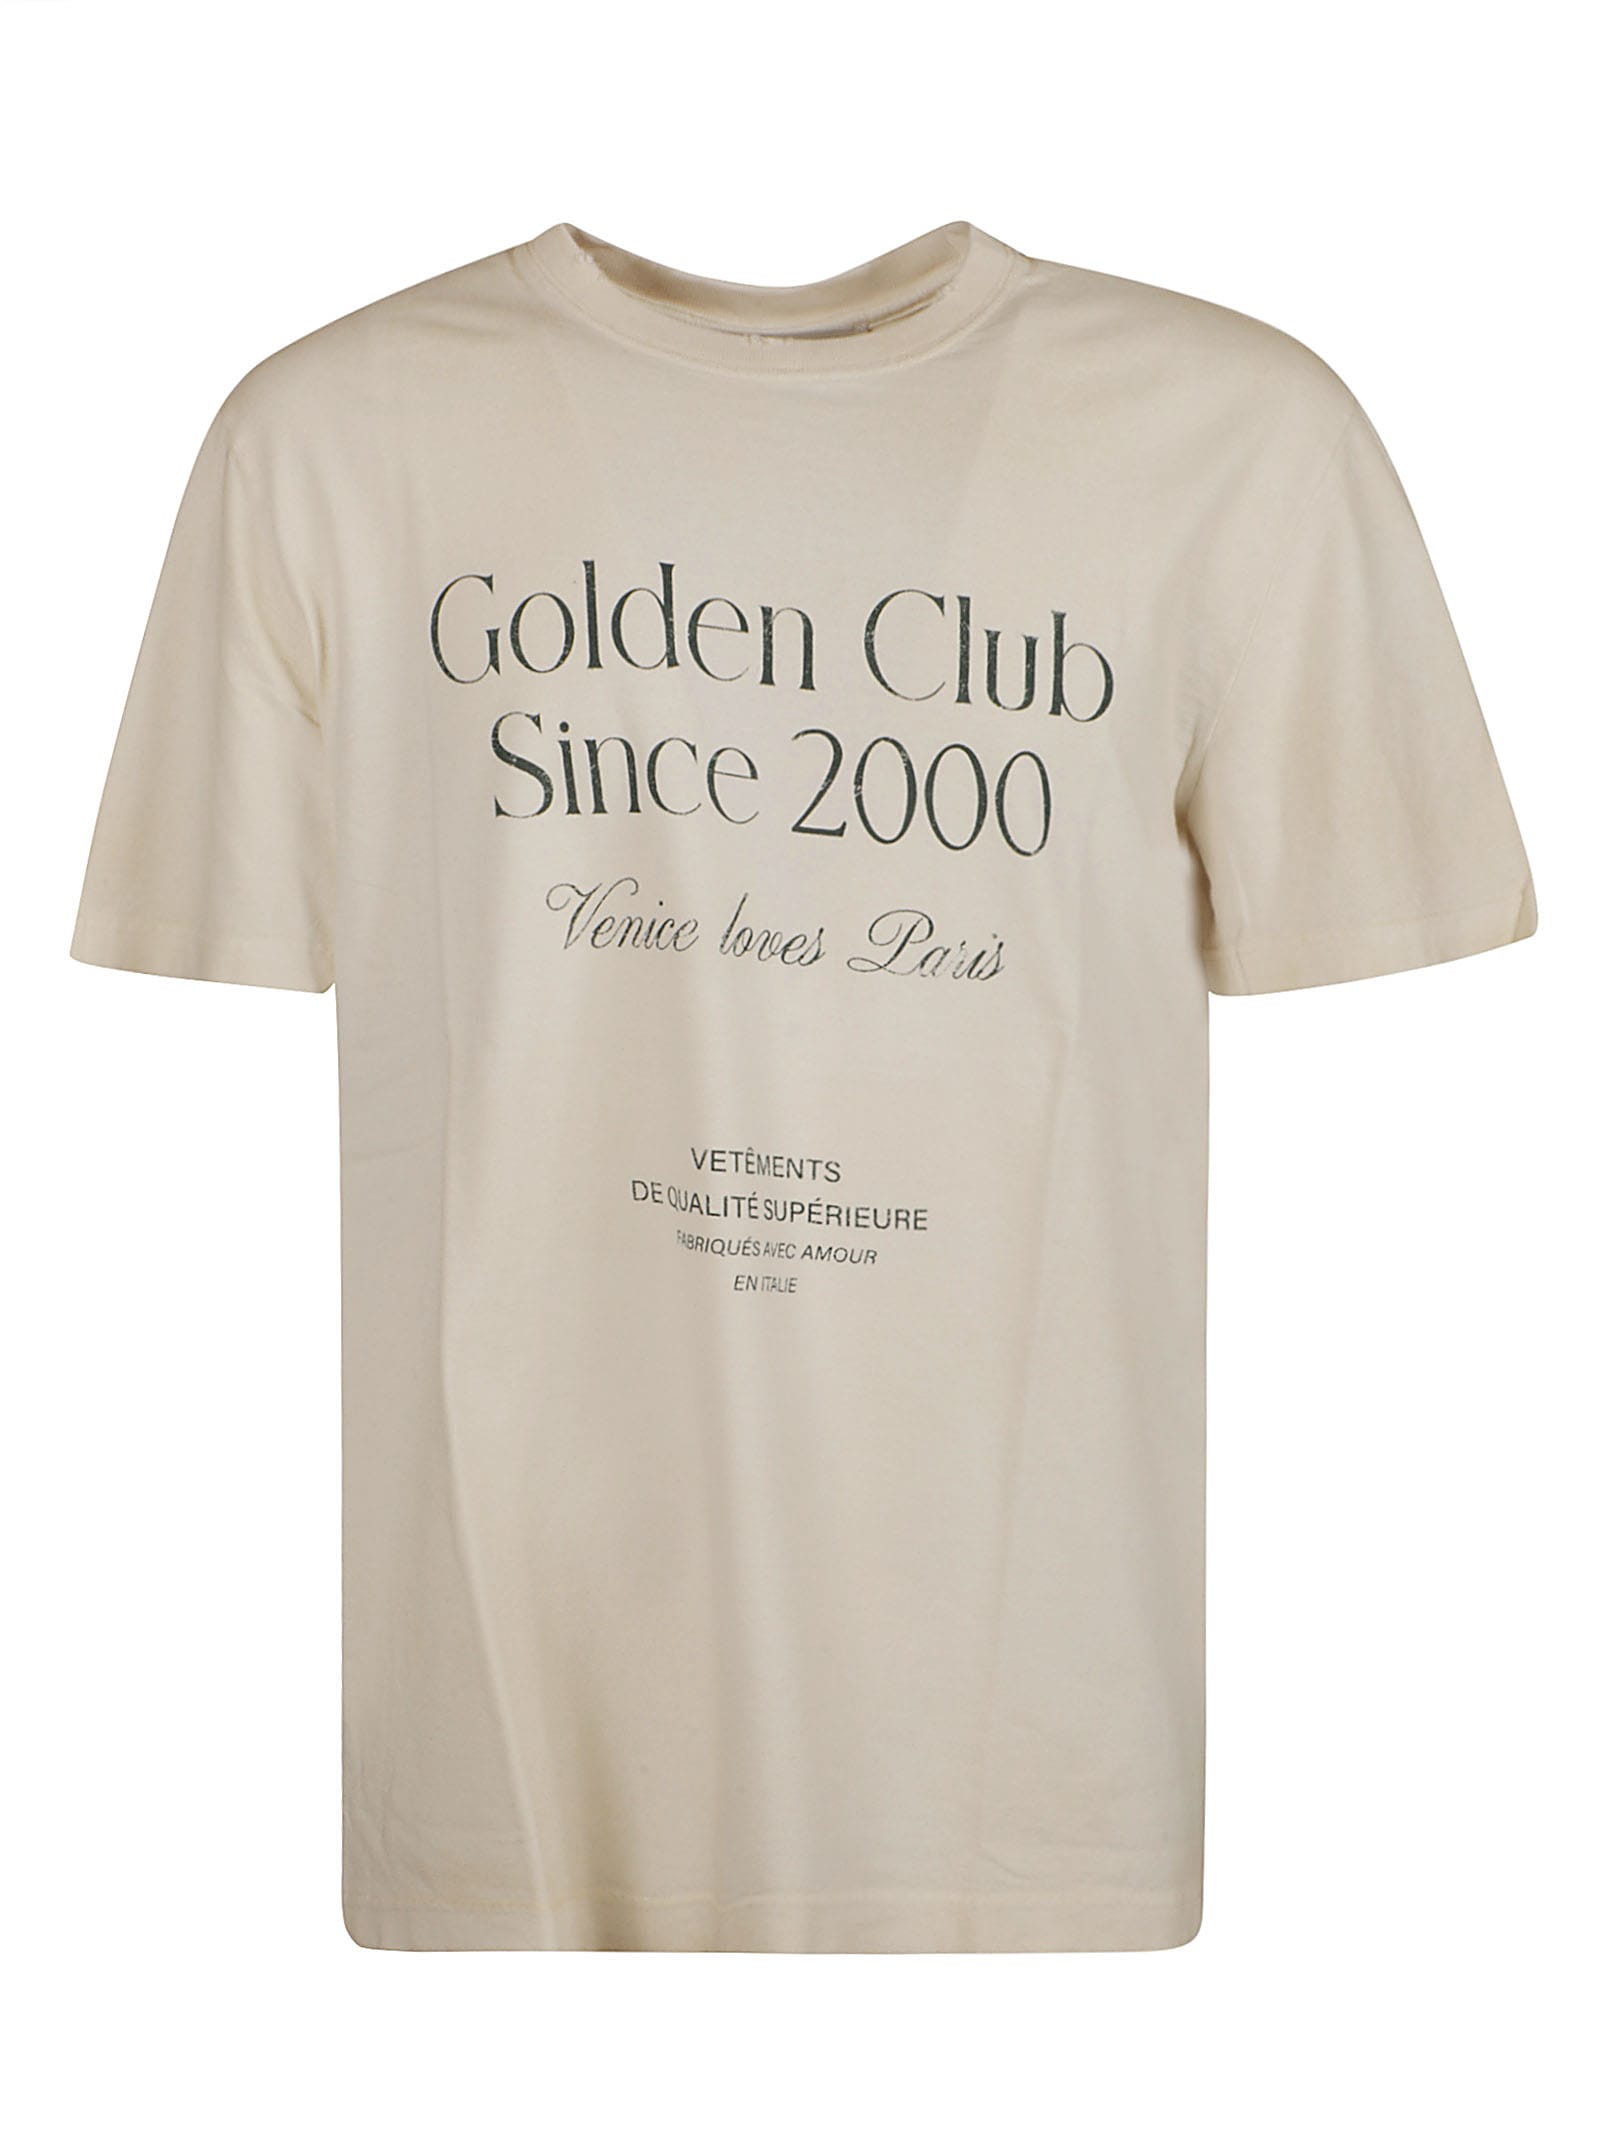 Golden Goose Golden Club T-shirt In Heritage White